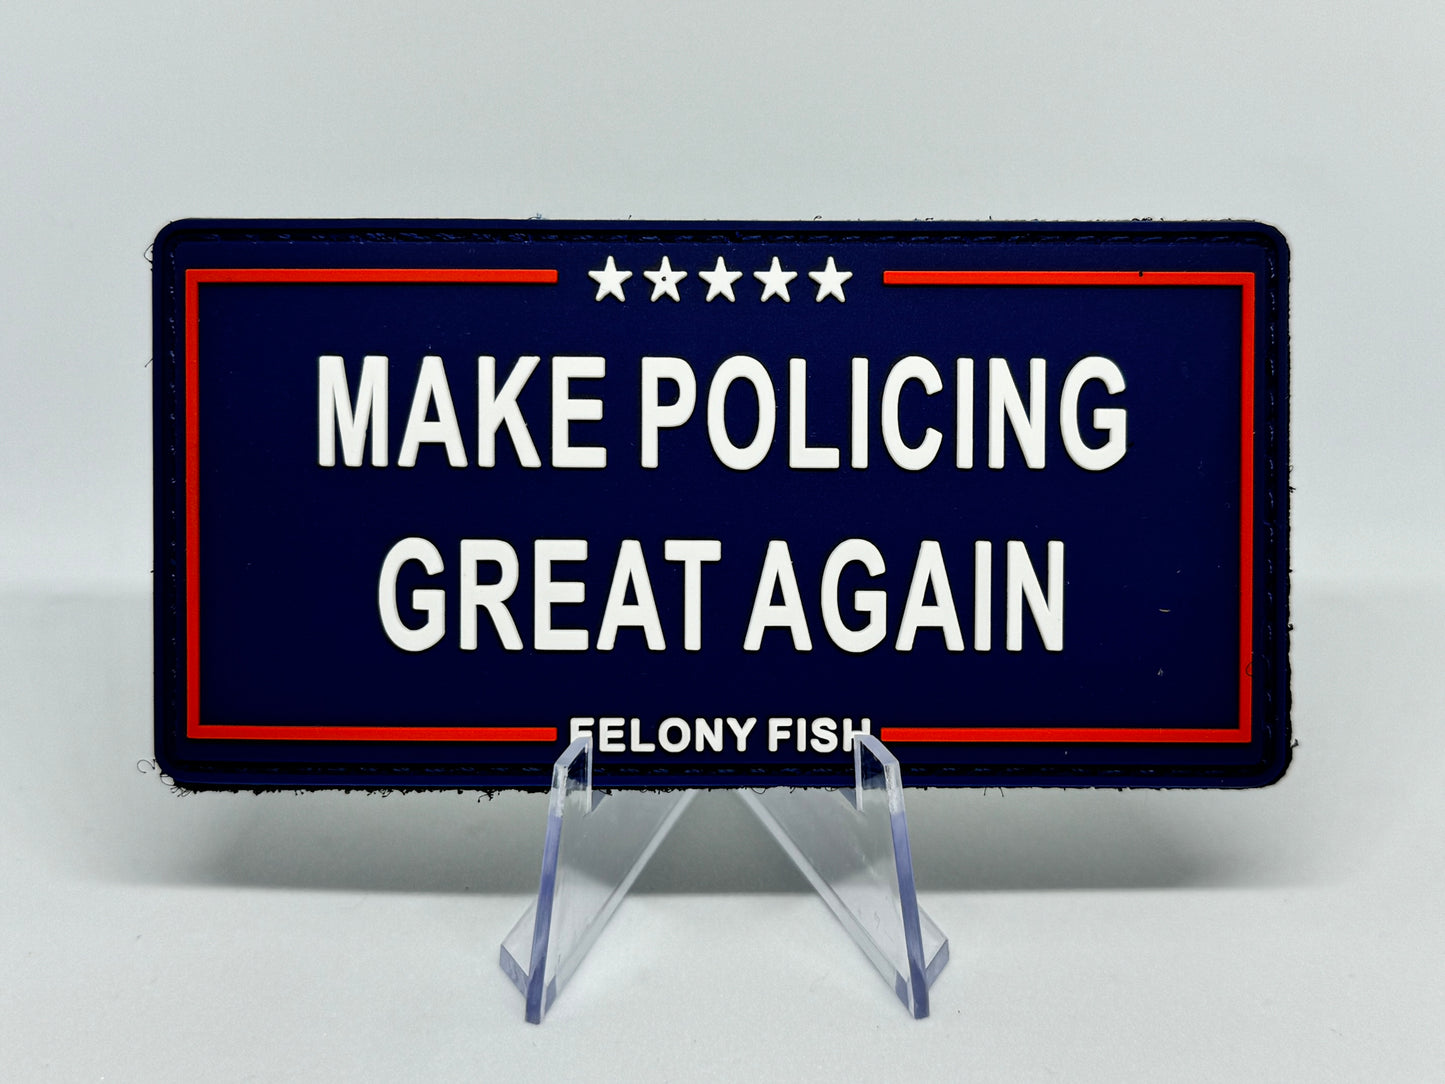 MAKE POLICING GREAT AGAIN